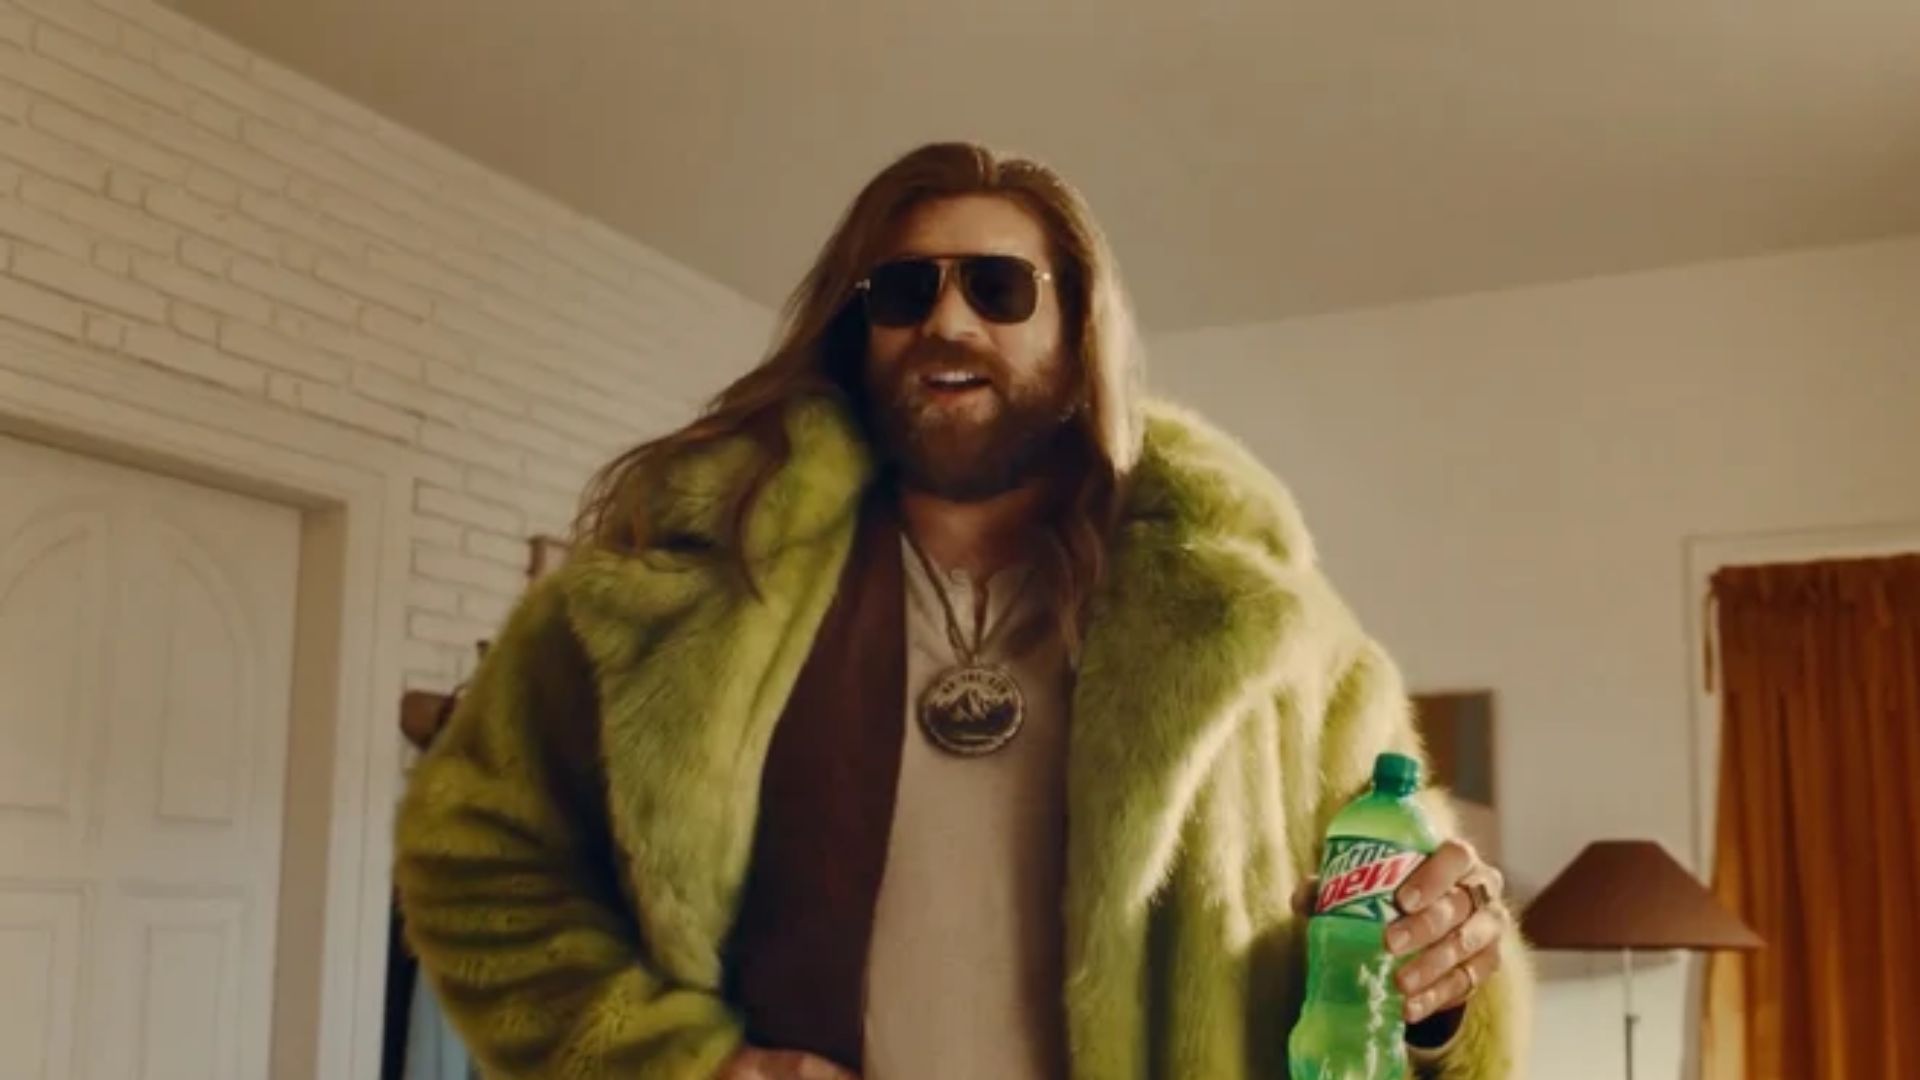 MTN dew reintroduces itself behind a tough talking, fur-coat wearing ‘mountain dude’